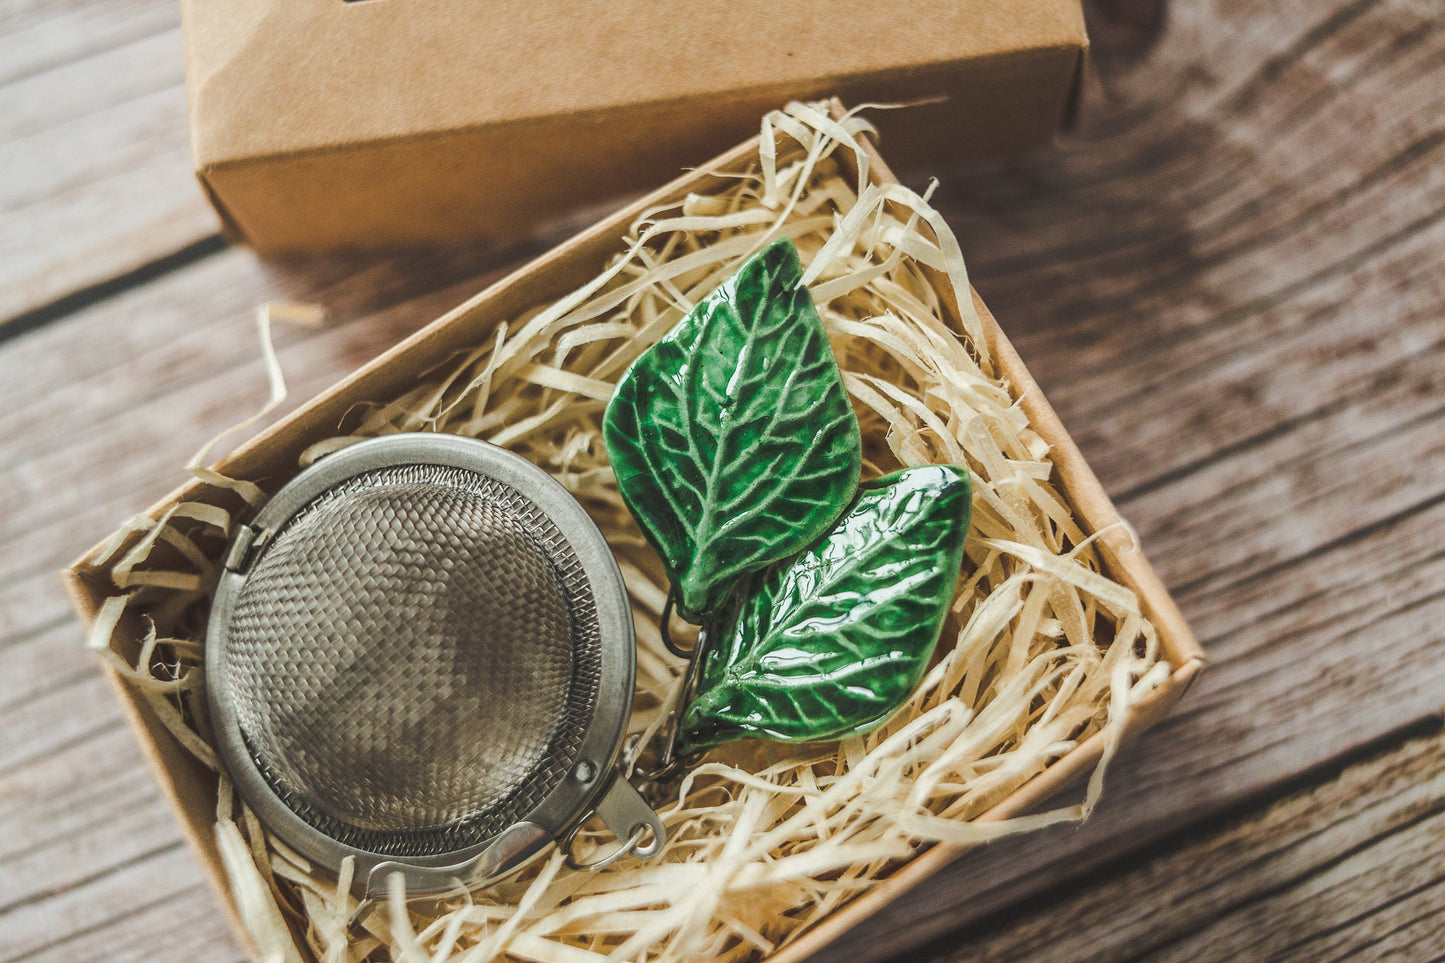 Loose leaf tea strainer - Tea infuser - Tea leaves tea steeper - Mother's day gift - Herbal tea infuser with ceramic charm